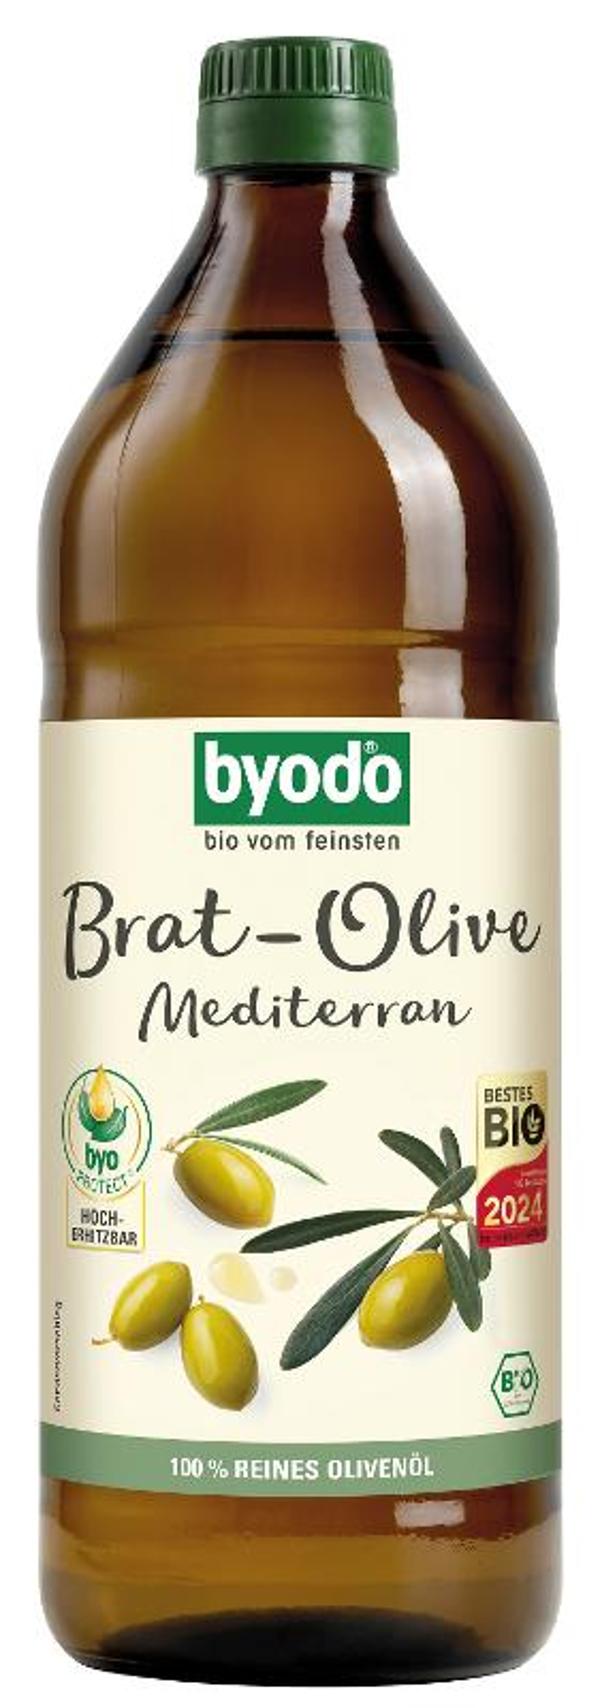 Produktfoto zu Brat-Olivenöl Mediterran 0,75l byodo